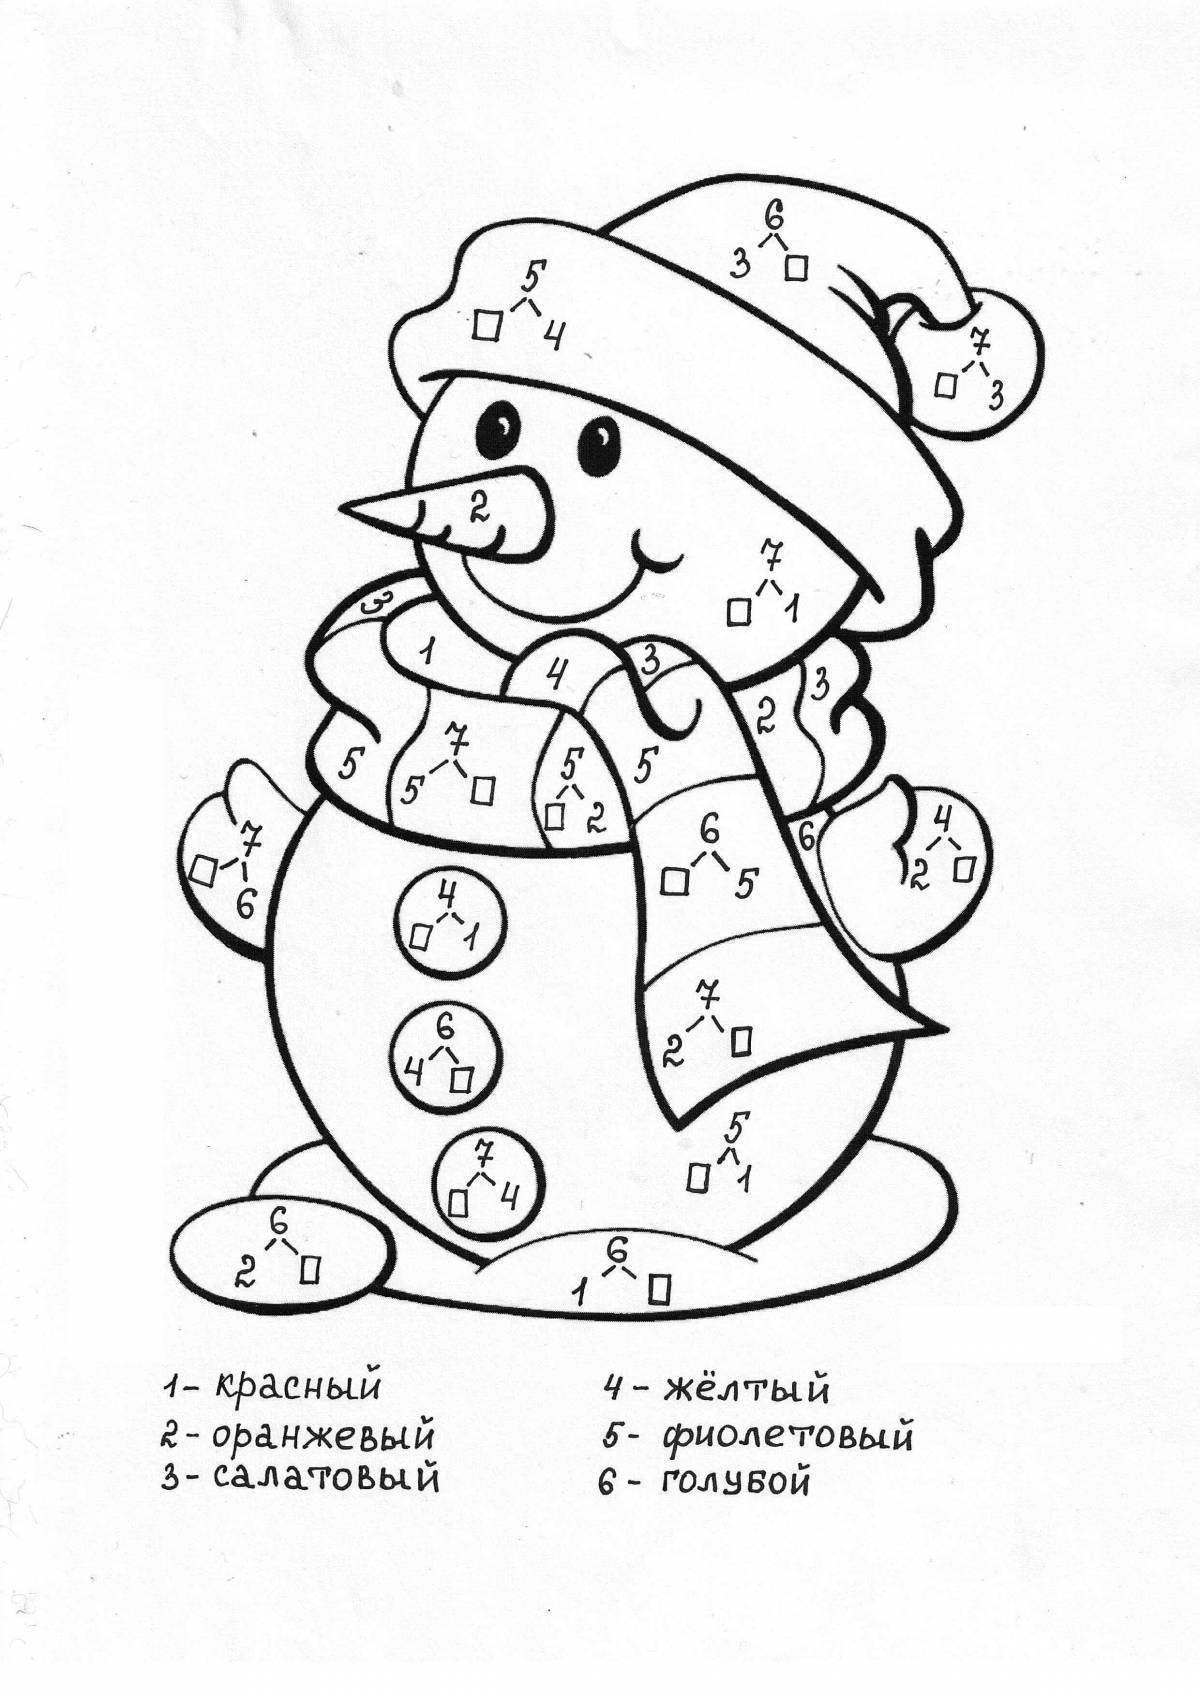 1st grade glamorous Christmas coloring book